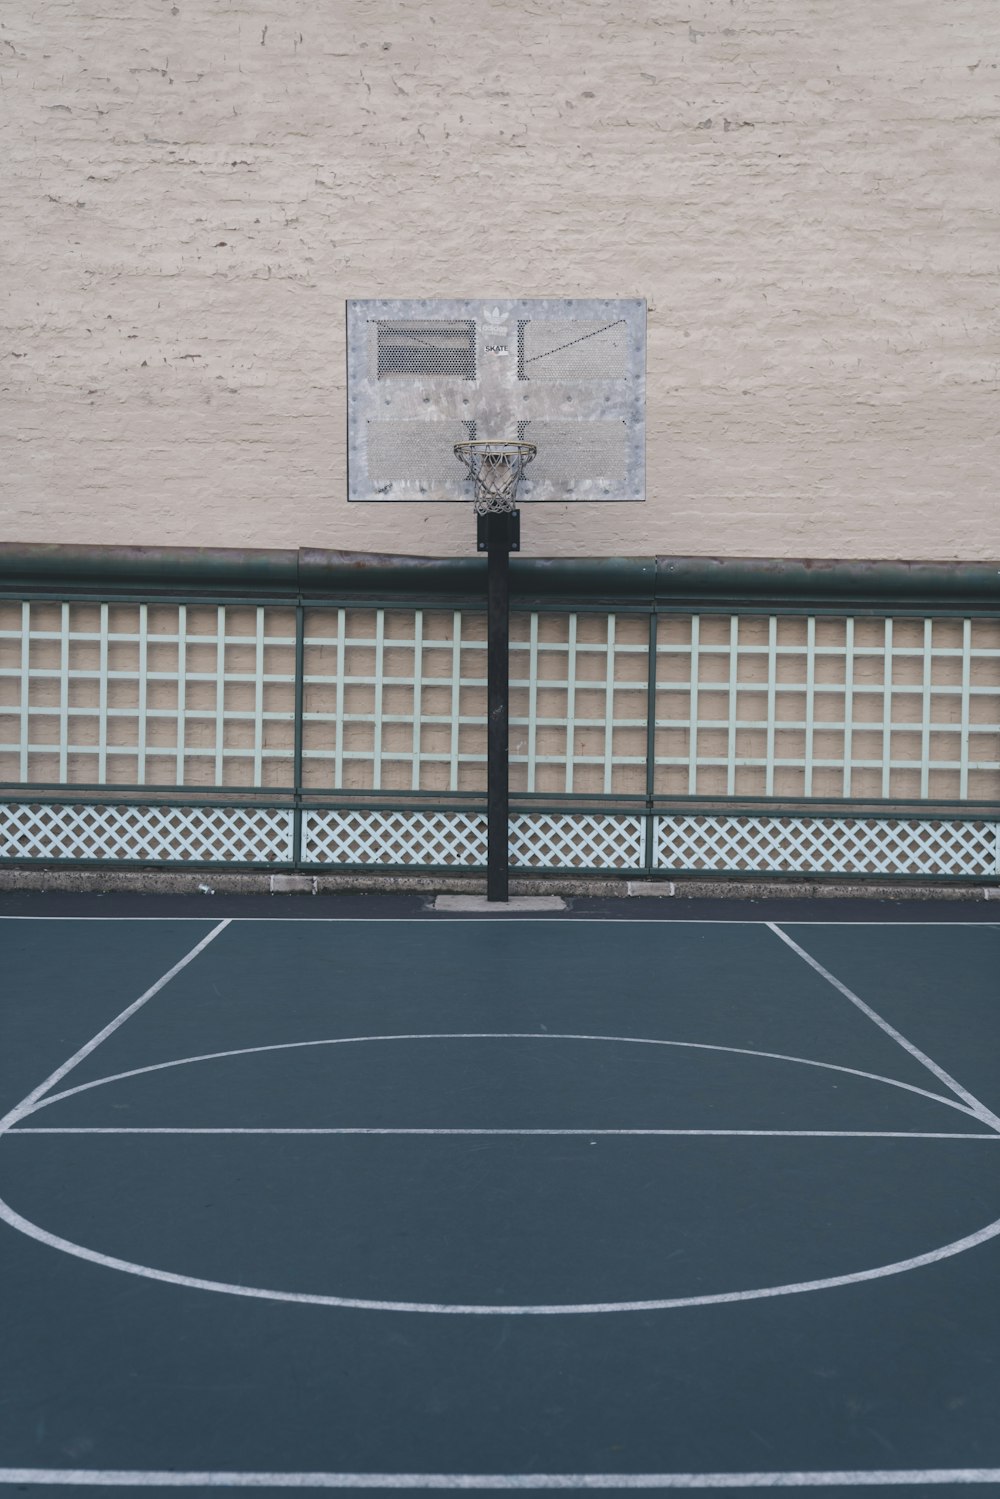 grauer Basketballplatz